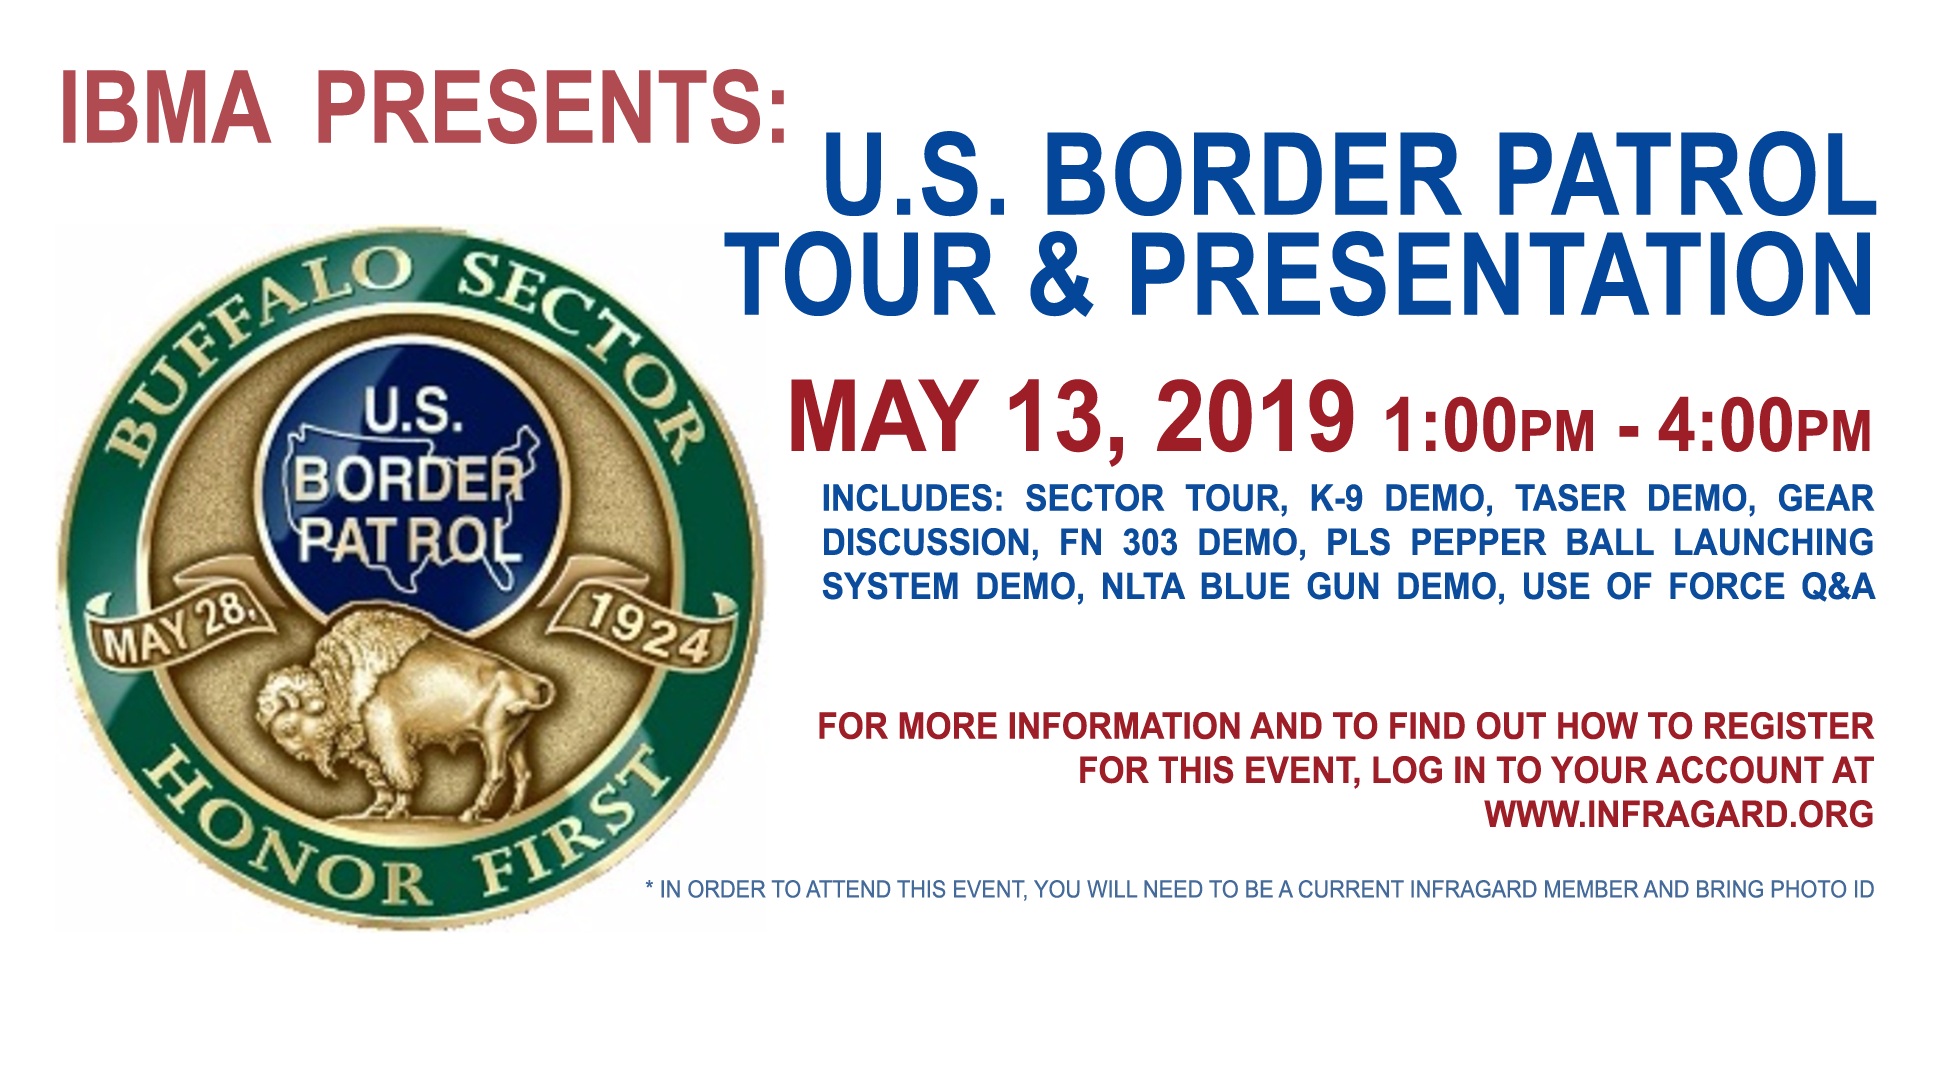  U.S. Border Patrol Tour & Presentation